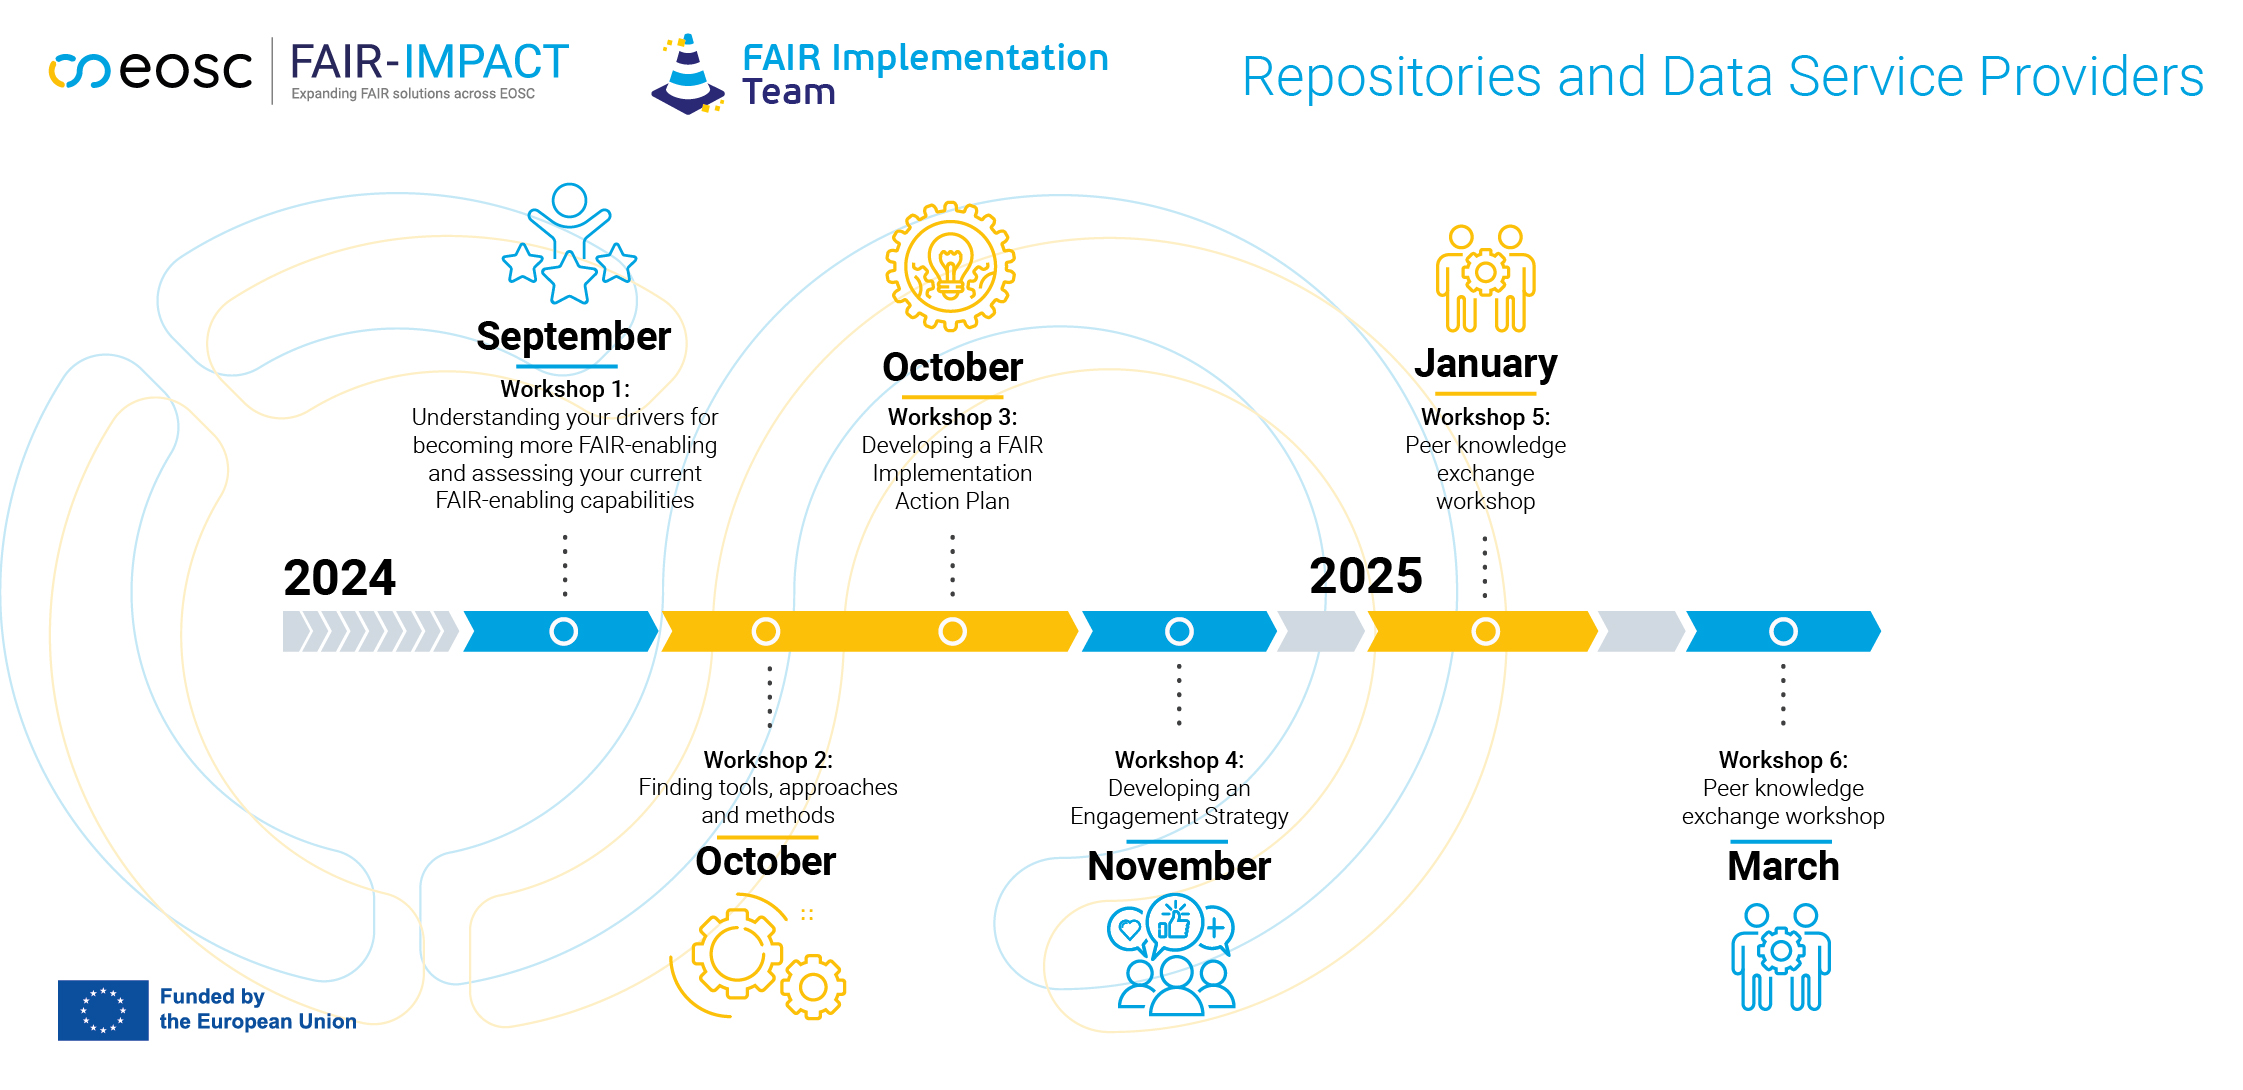 Repositories & Data Service Providers timeline